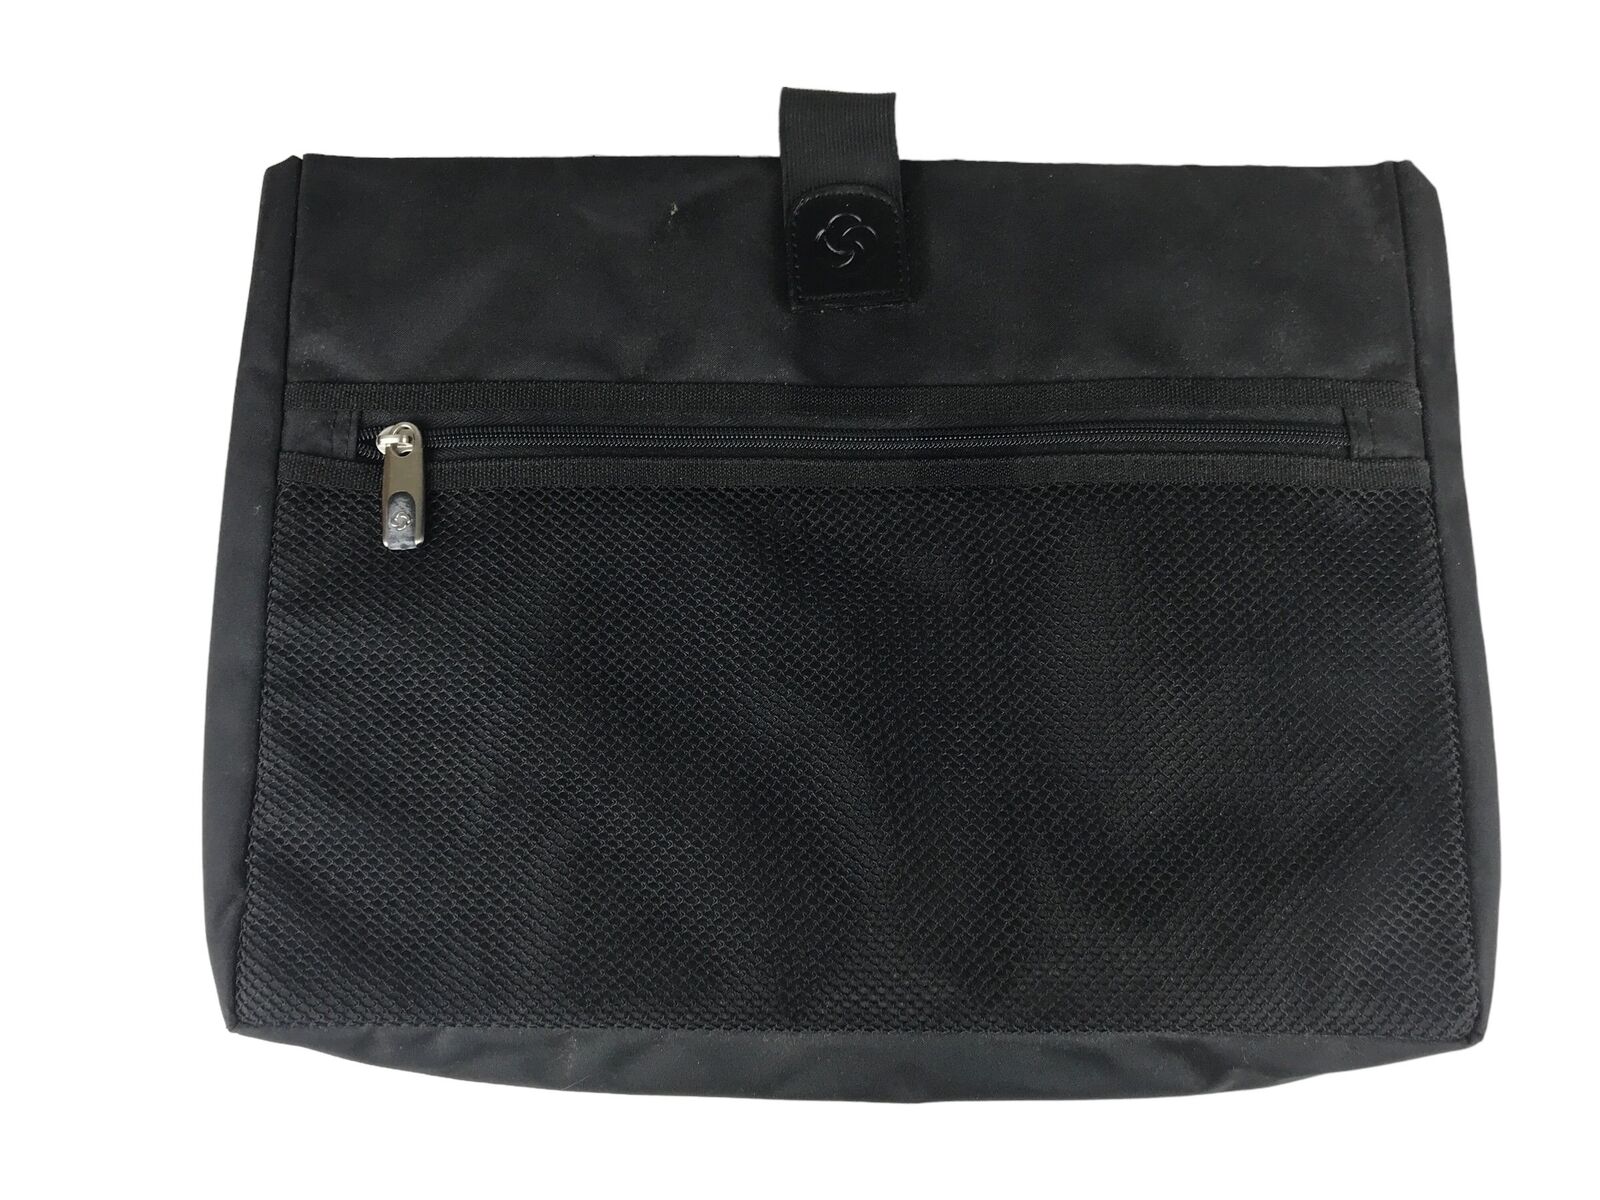 Samsonite Unisex Black Outer Pockets Hook And Loop Laptop Sleeve Case